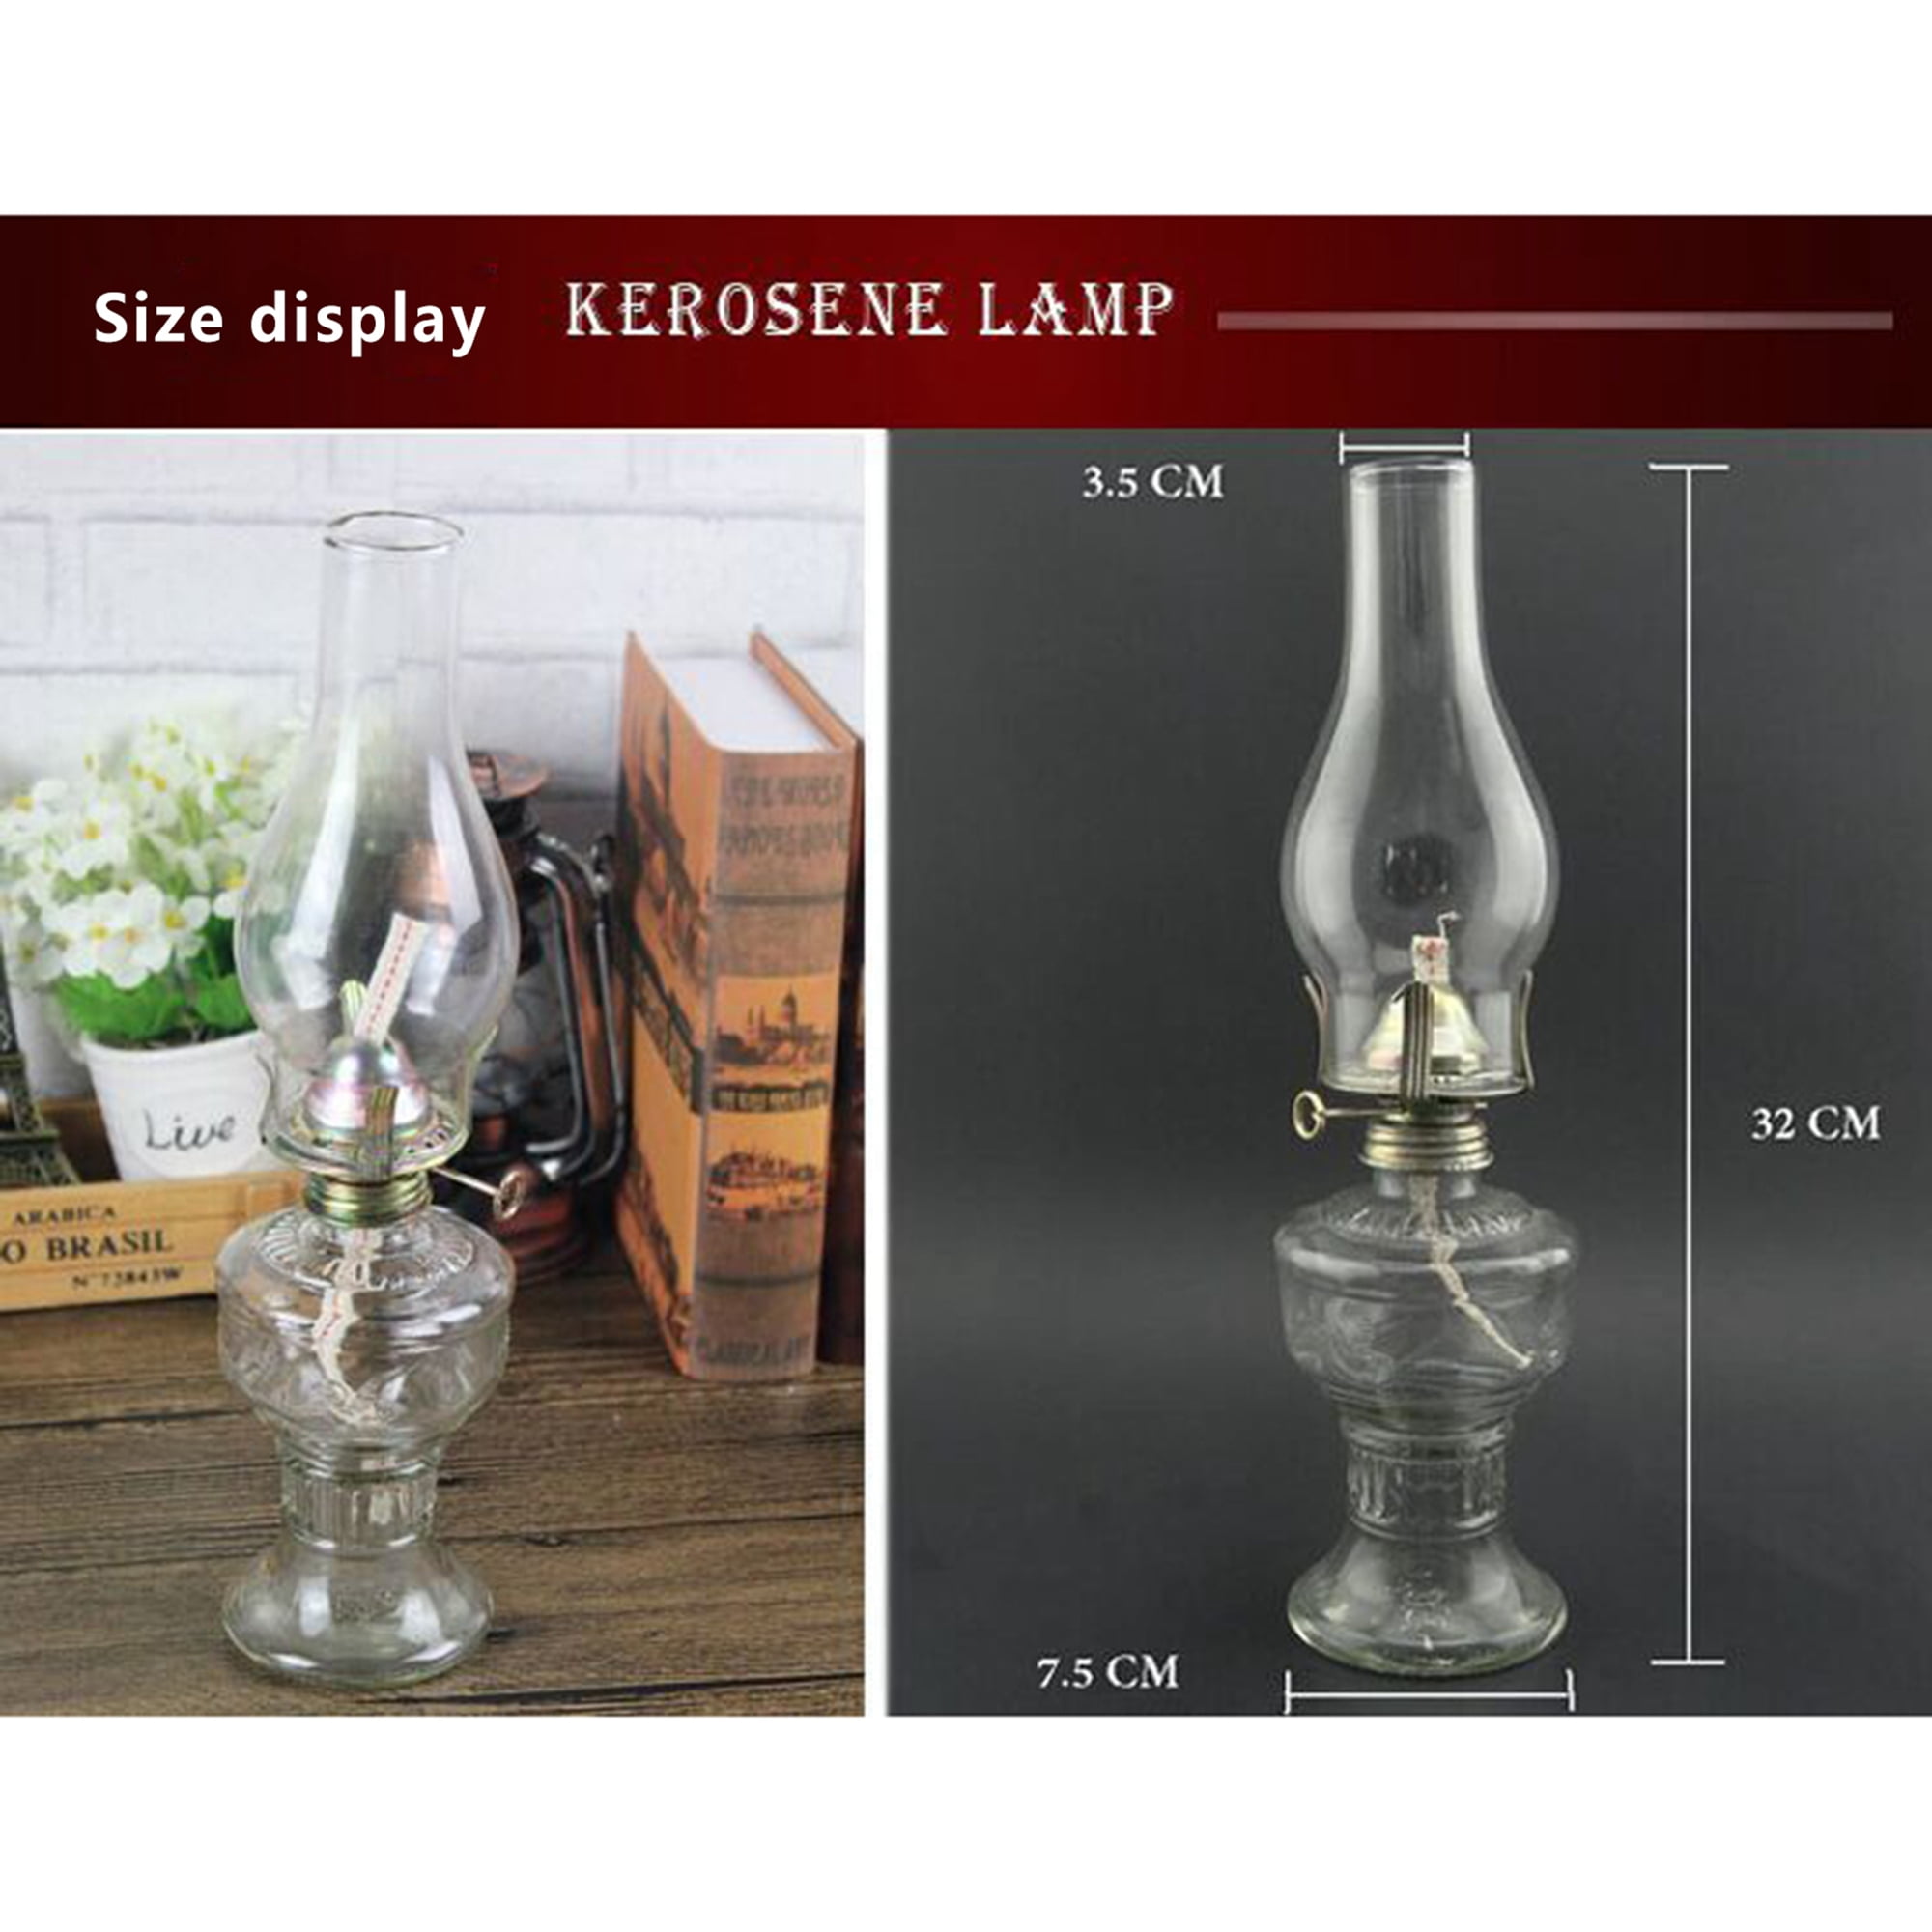  4 Pcs Large Oil Lamps for Indoor Use Vintage Glass Kerosene  Lantern Clear Kerosene Lamp Chamber Hurricane Lamps Antique Oil Lantern  with Adjustable Fire Wick for Home Lighting Tabletop Decor, 11